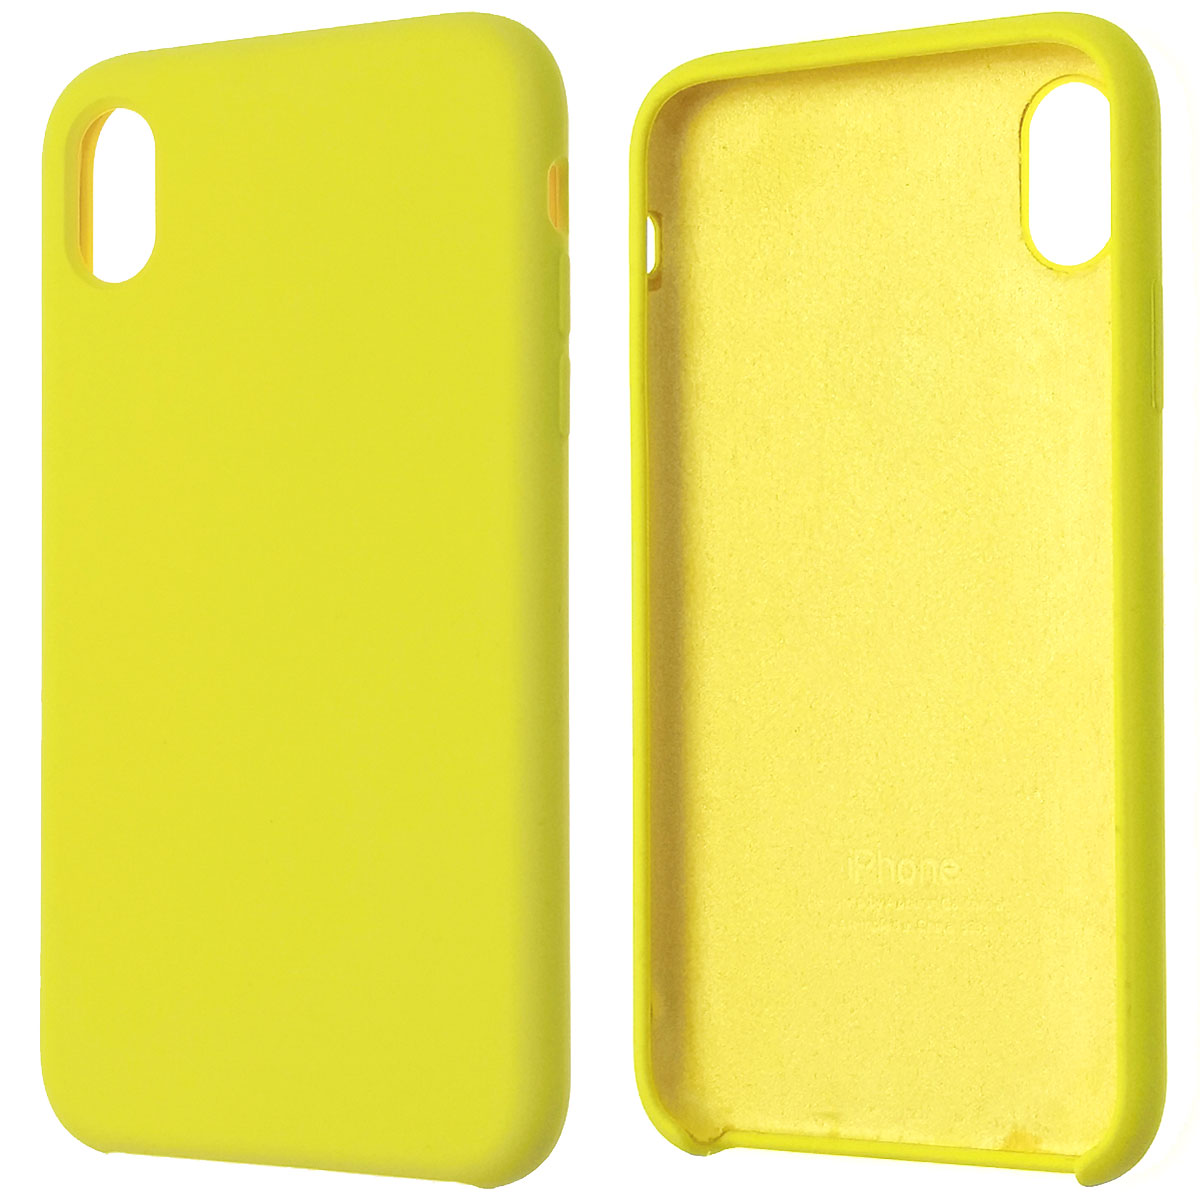 Чехол накладка Silicon Case для APPLE iPhone XR, силикон, бархат, цвет ярко желтый.